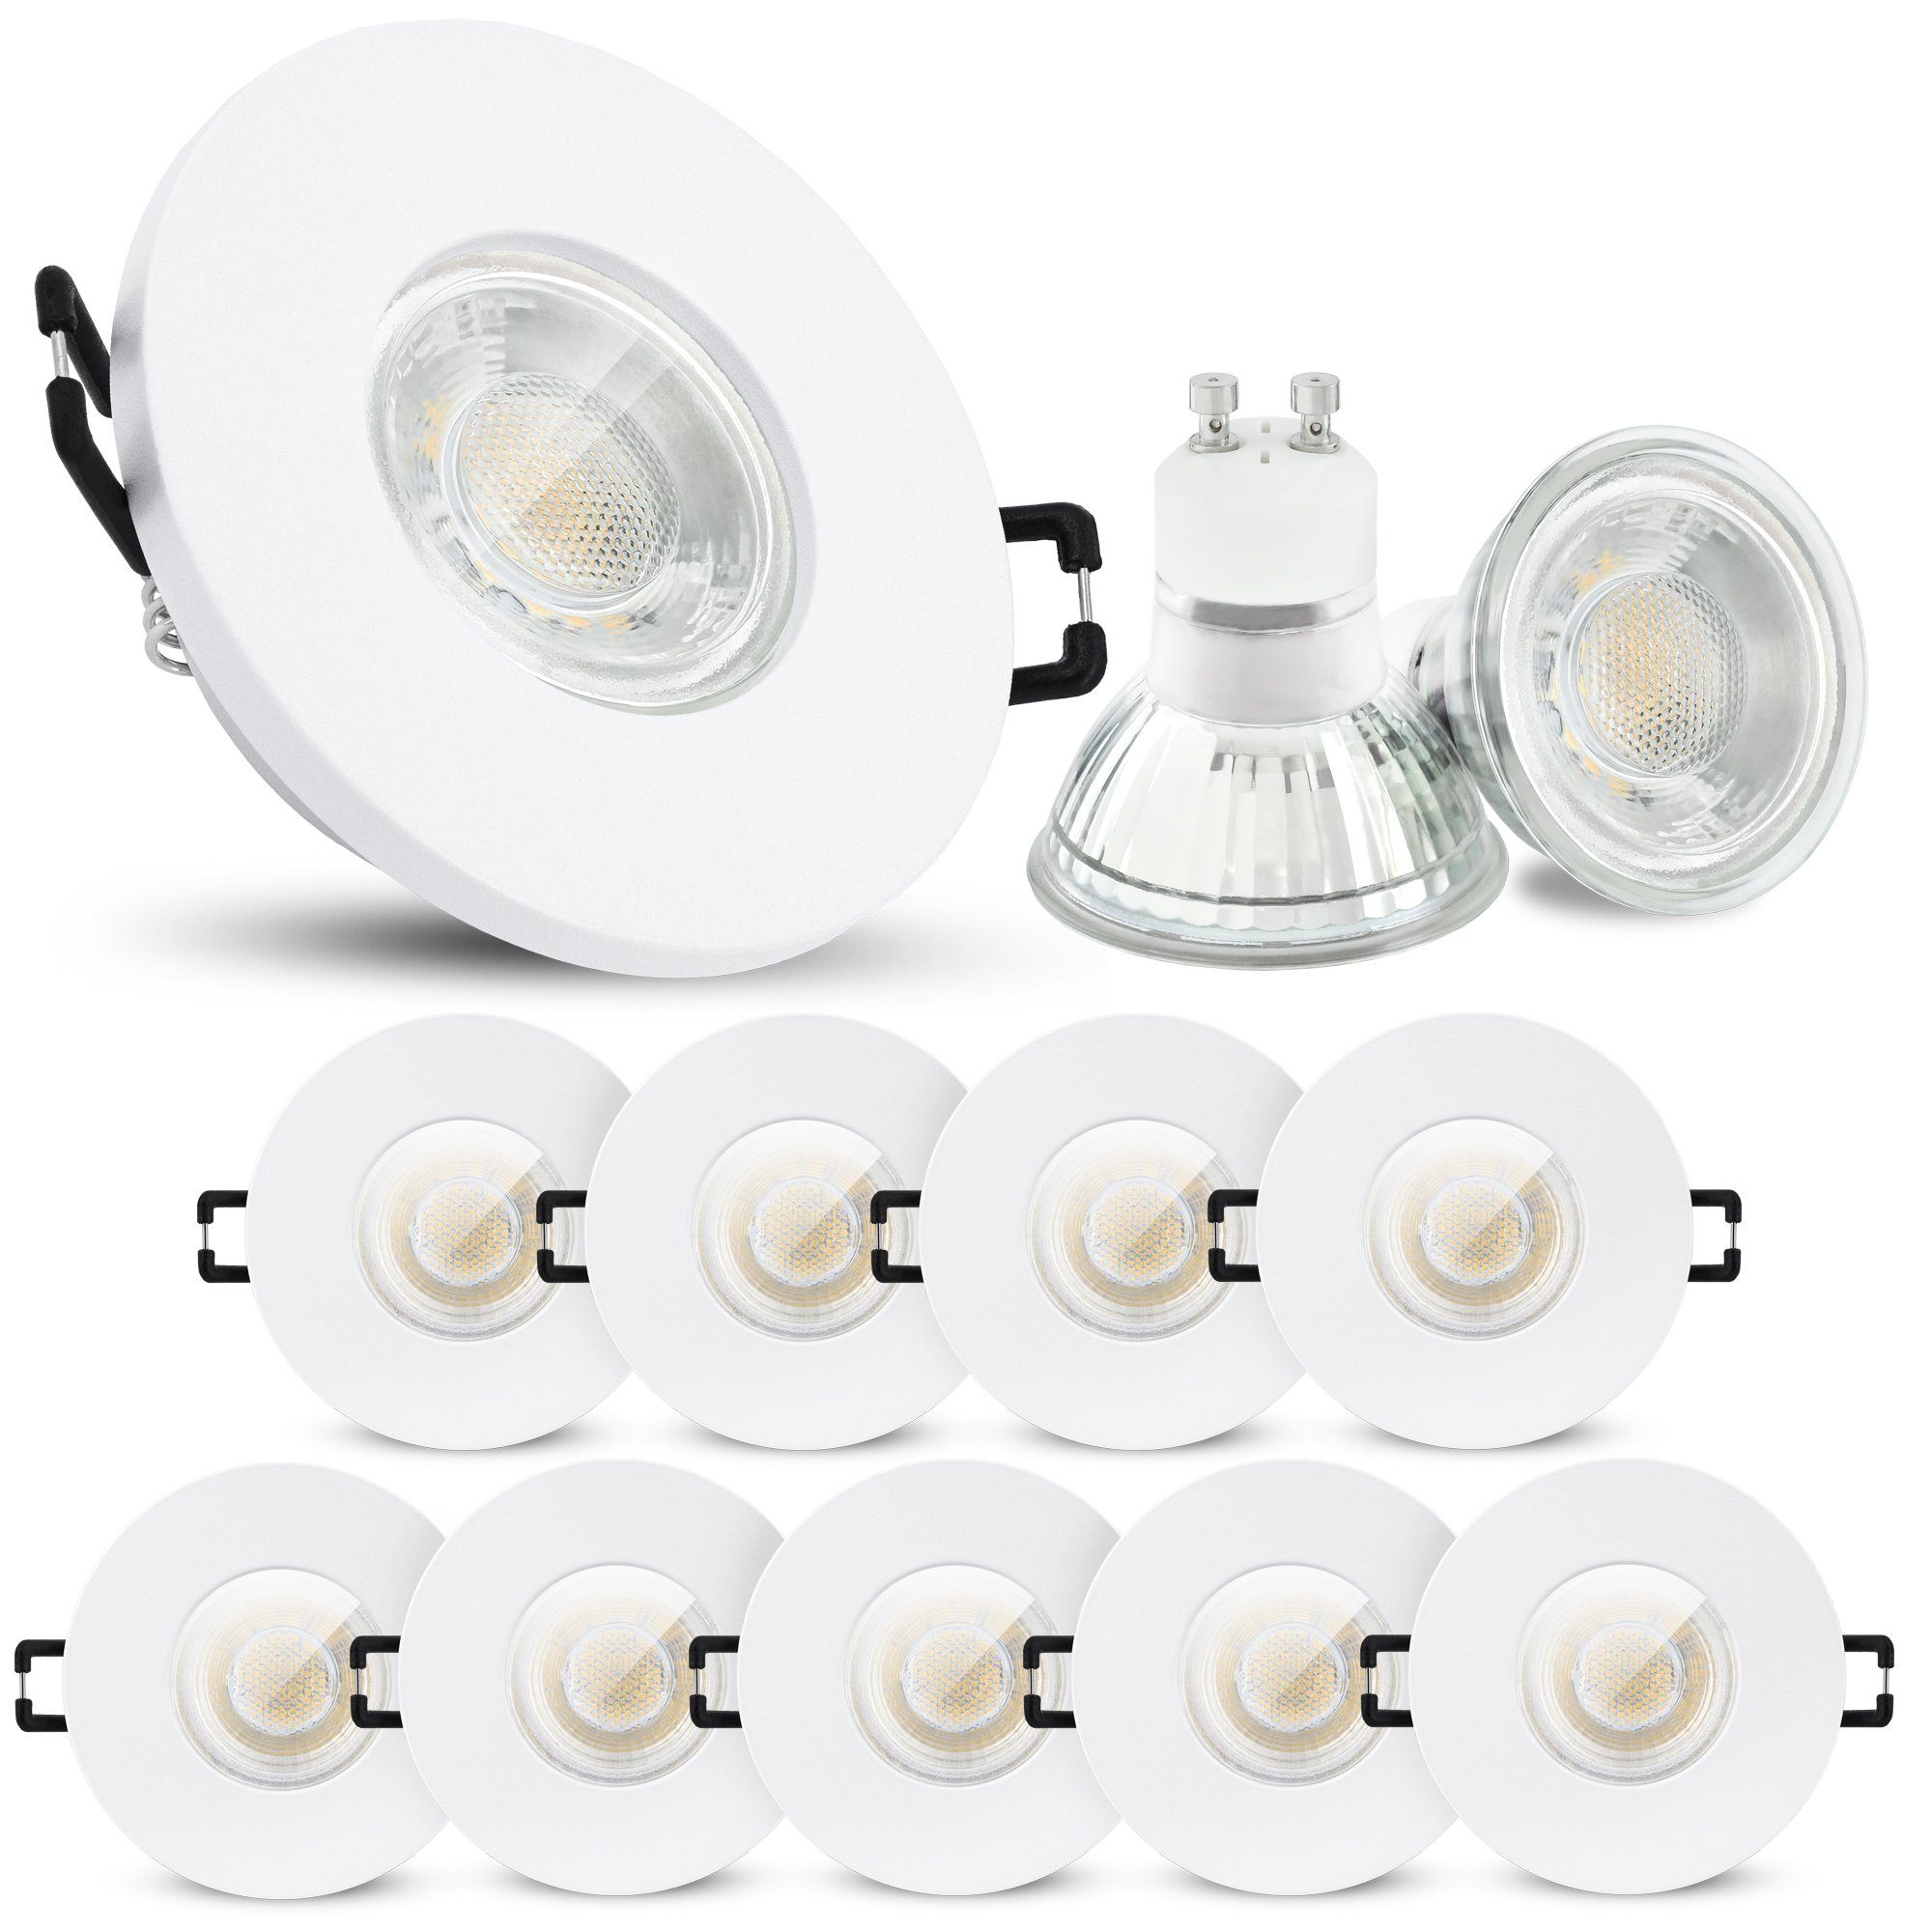 linovum LED Einbaustrahler 10er Set LED Einbaustrahler IP65 warmweiss GU10 3W 230V - Einbauspot, Leuchtmittel inklusive, Leuchtmittel inklusive